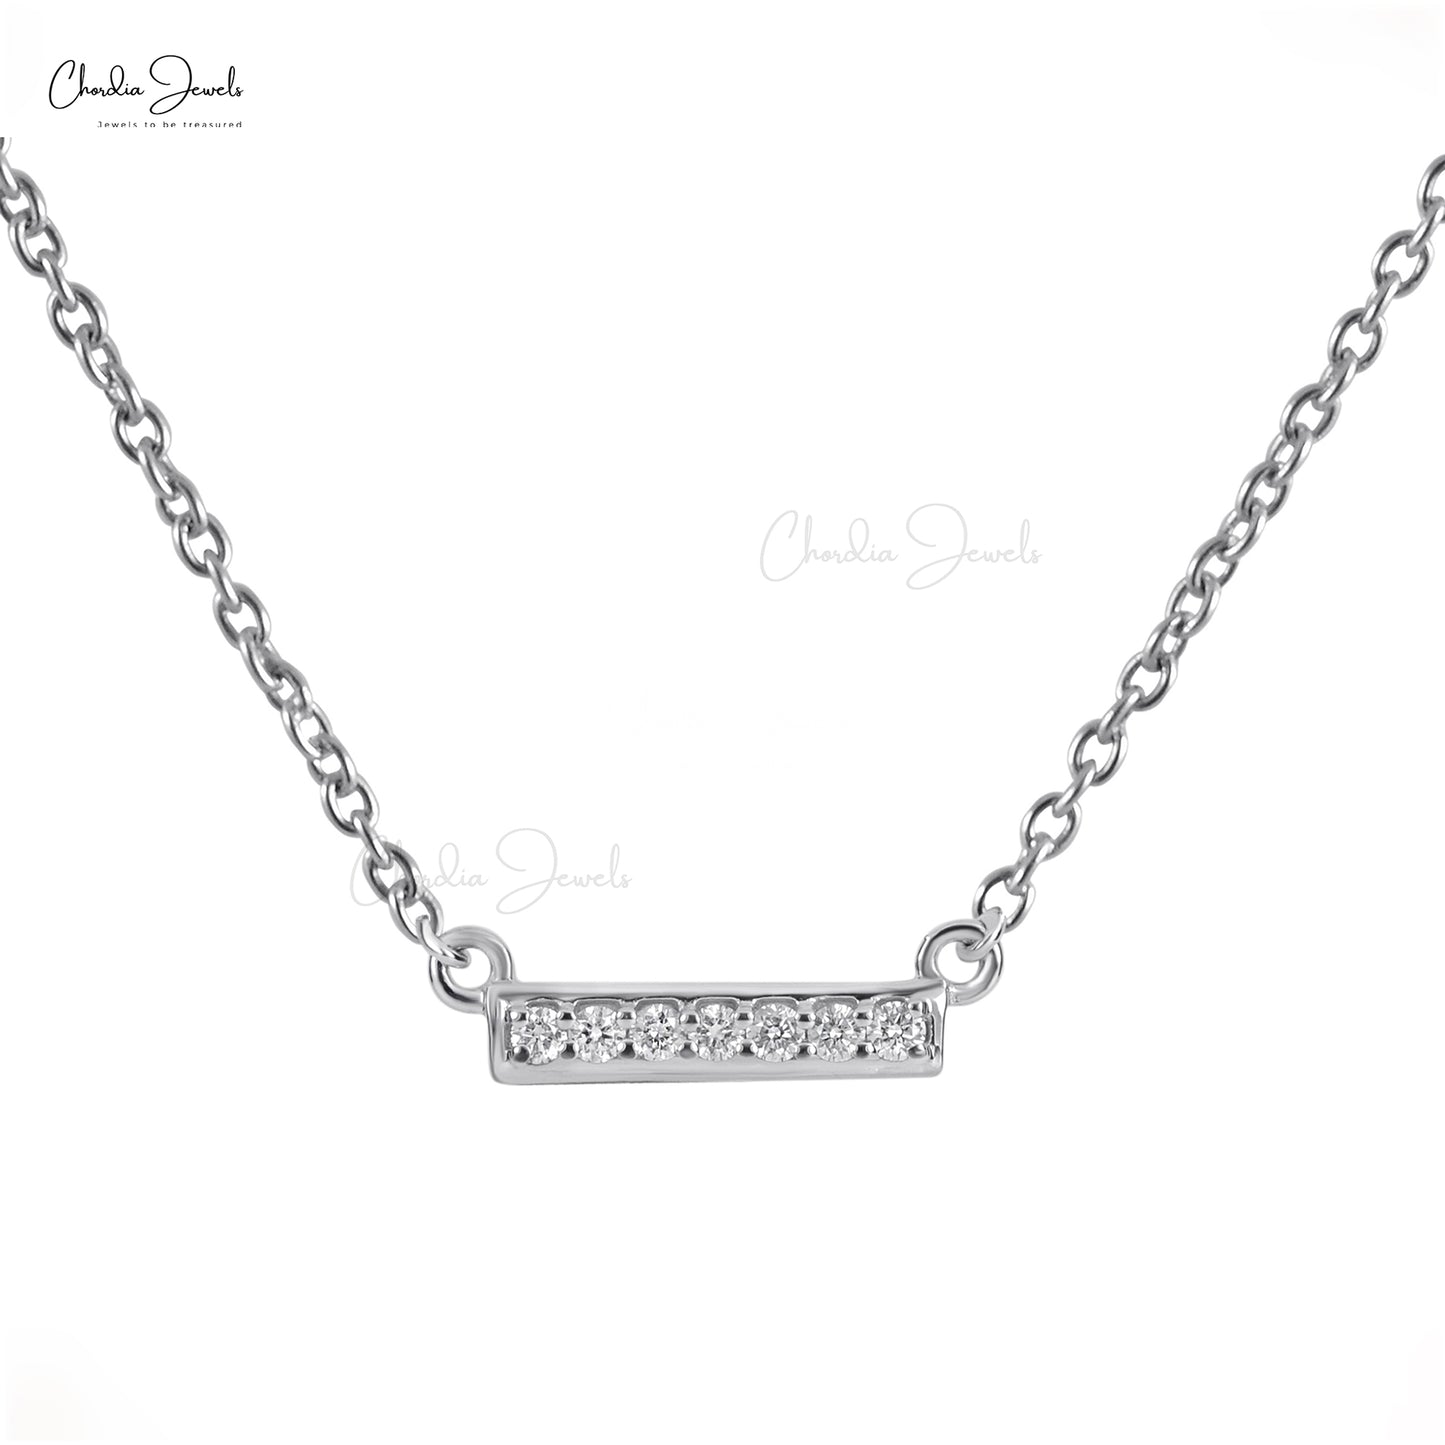 Pave Set Diamond Dainty Necklace 1.6mm Round Gemstone Necklace 14k Solid White Gold Necklace Jewelry